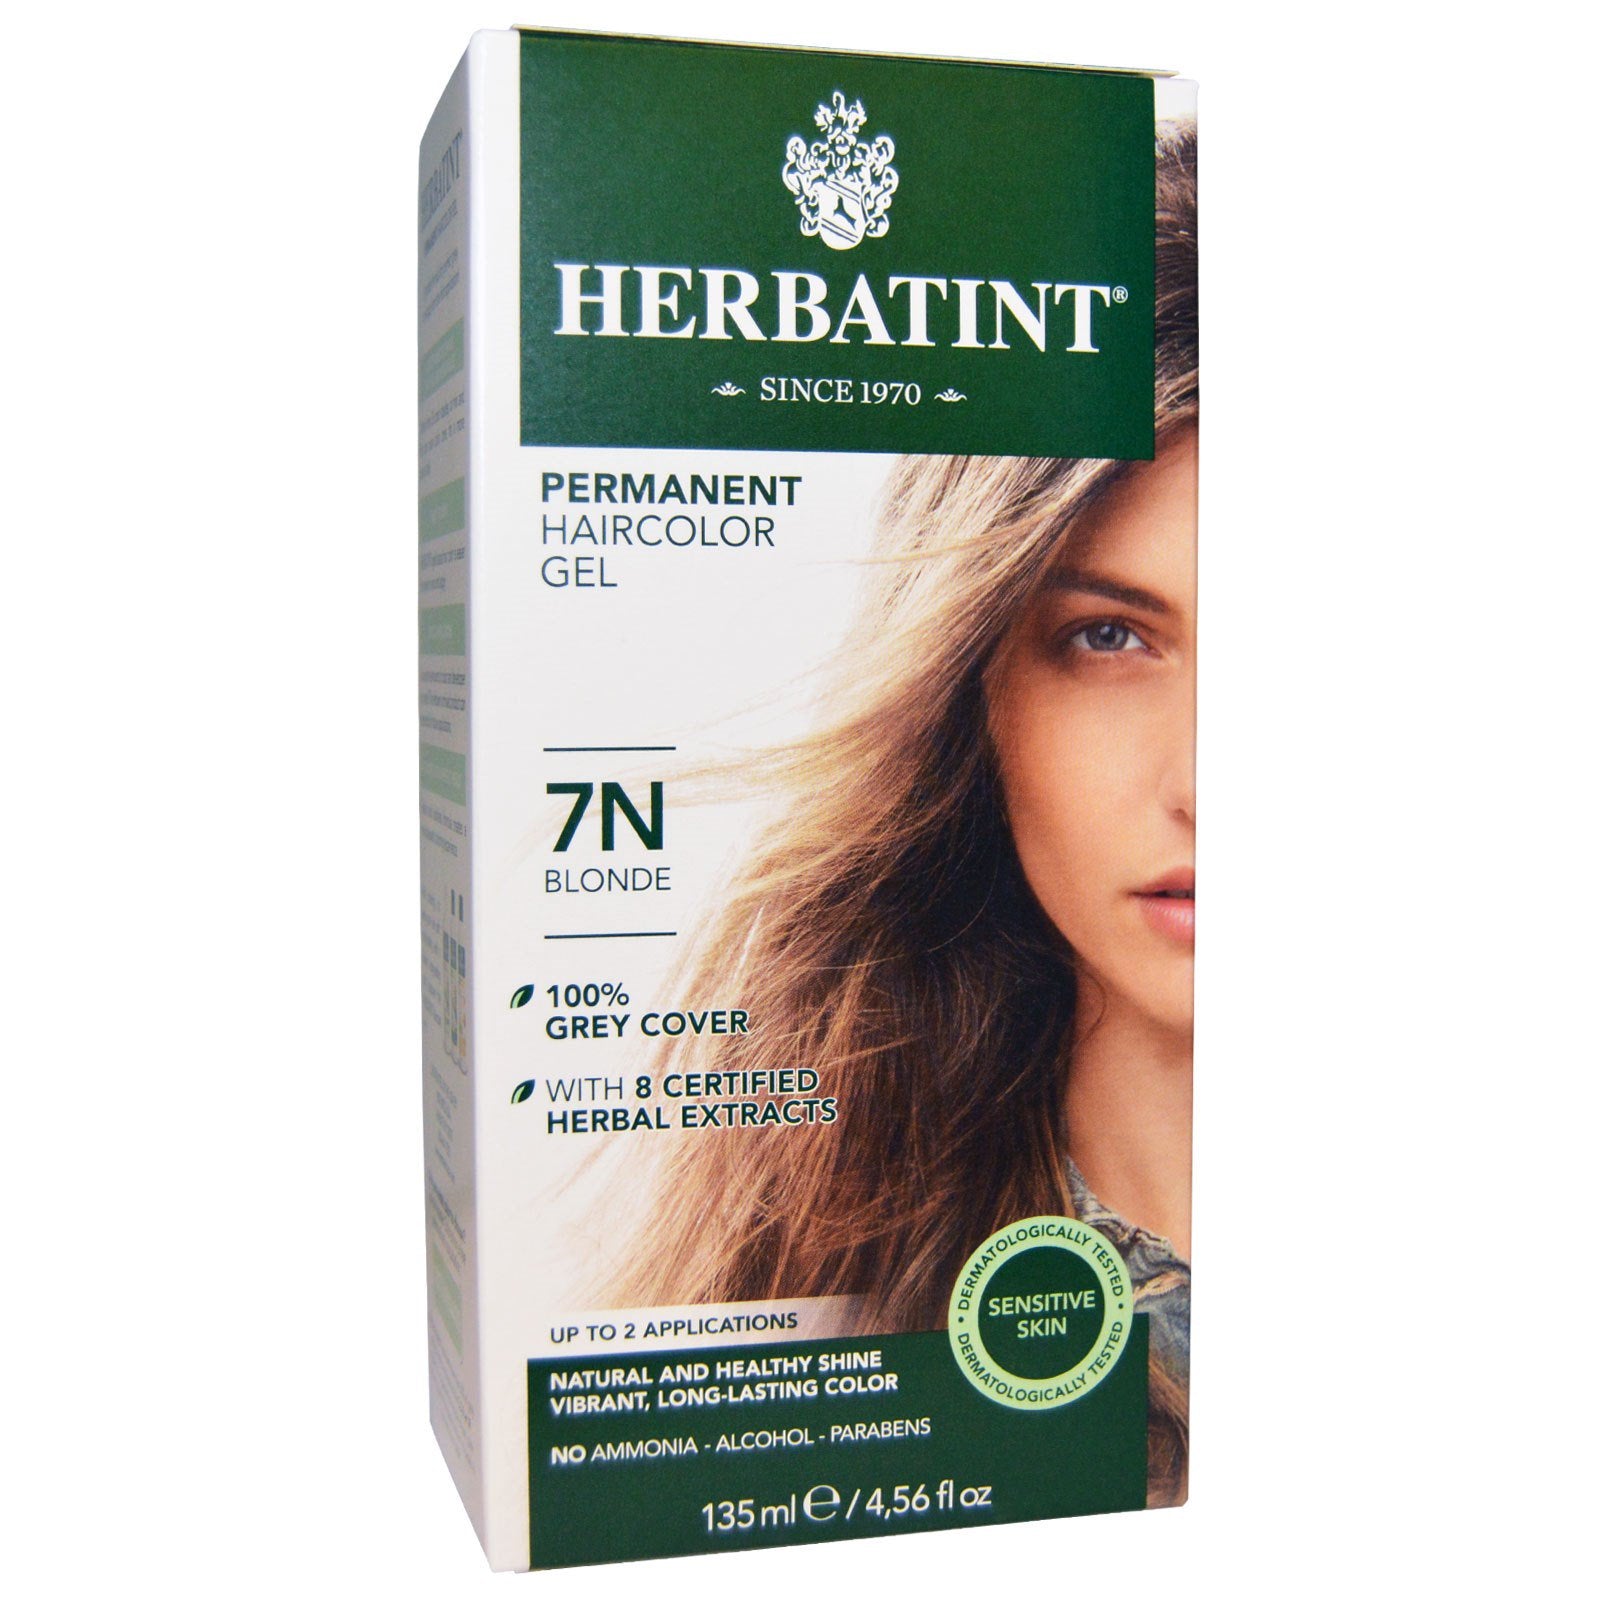 Herbatint - Permanent Haircolor Gel (7N - Blonde)